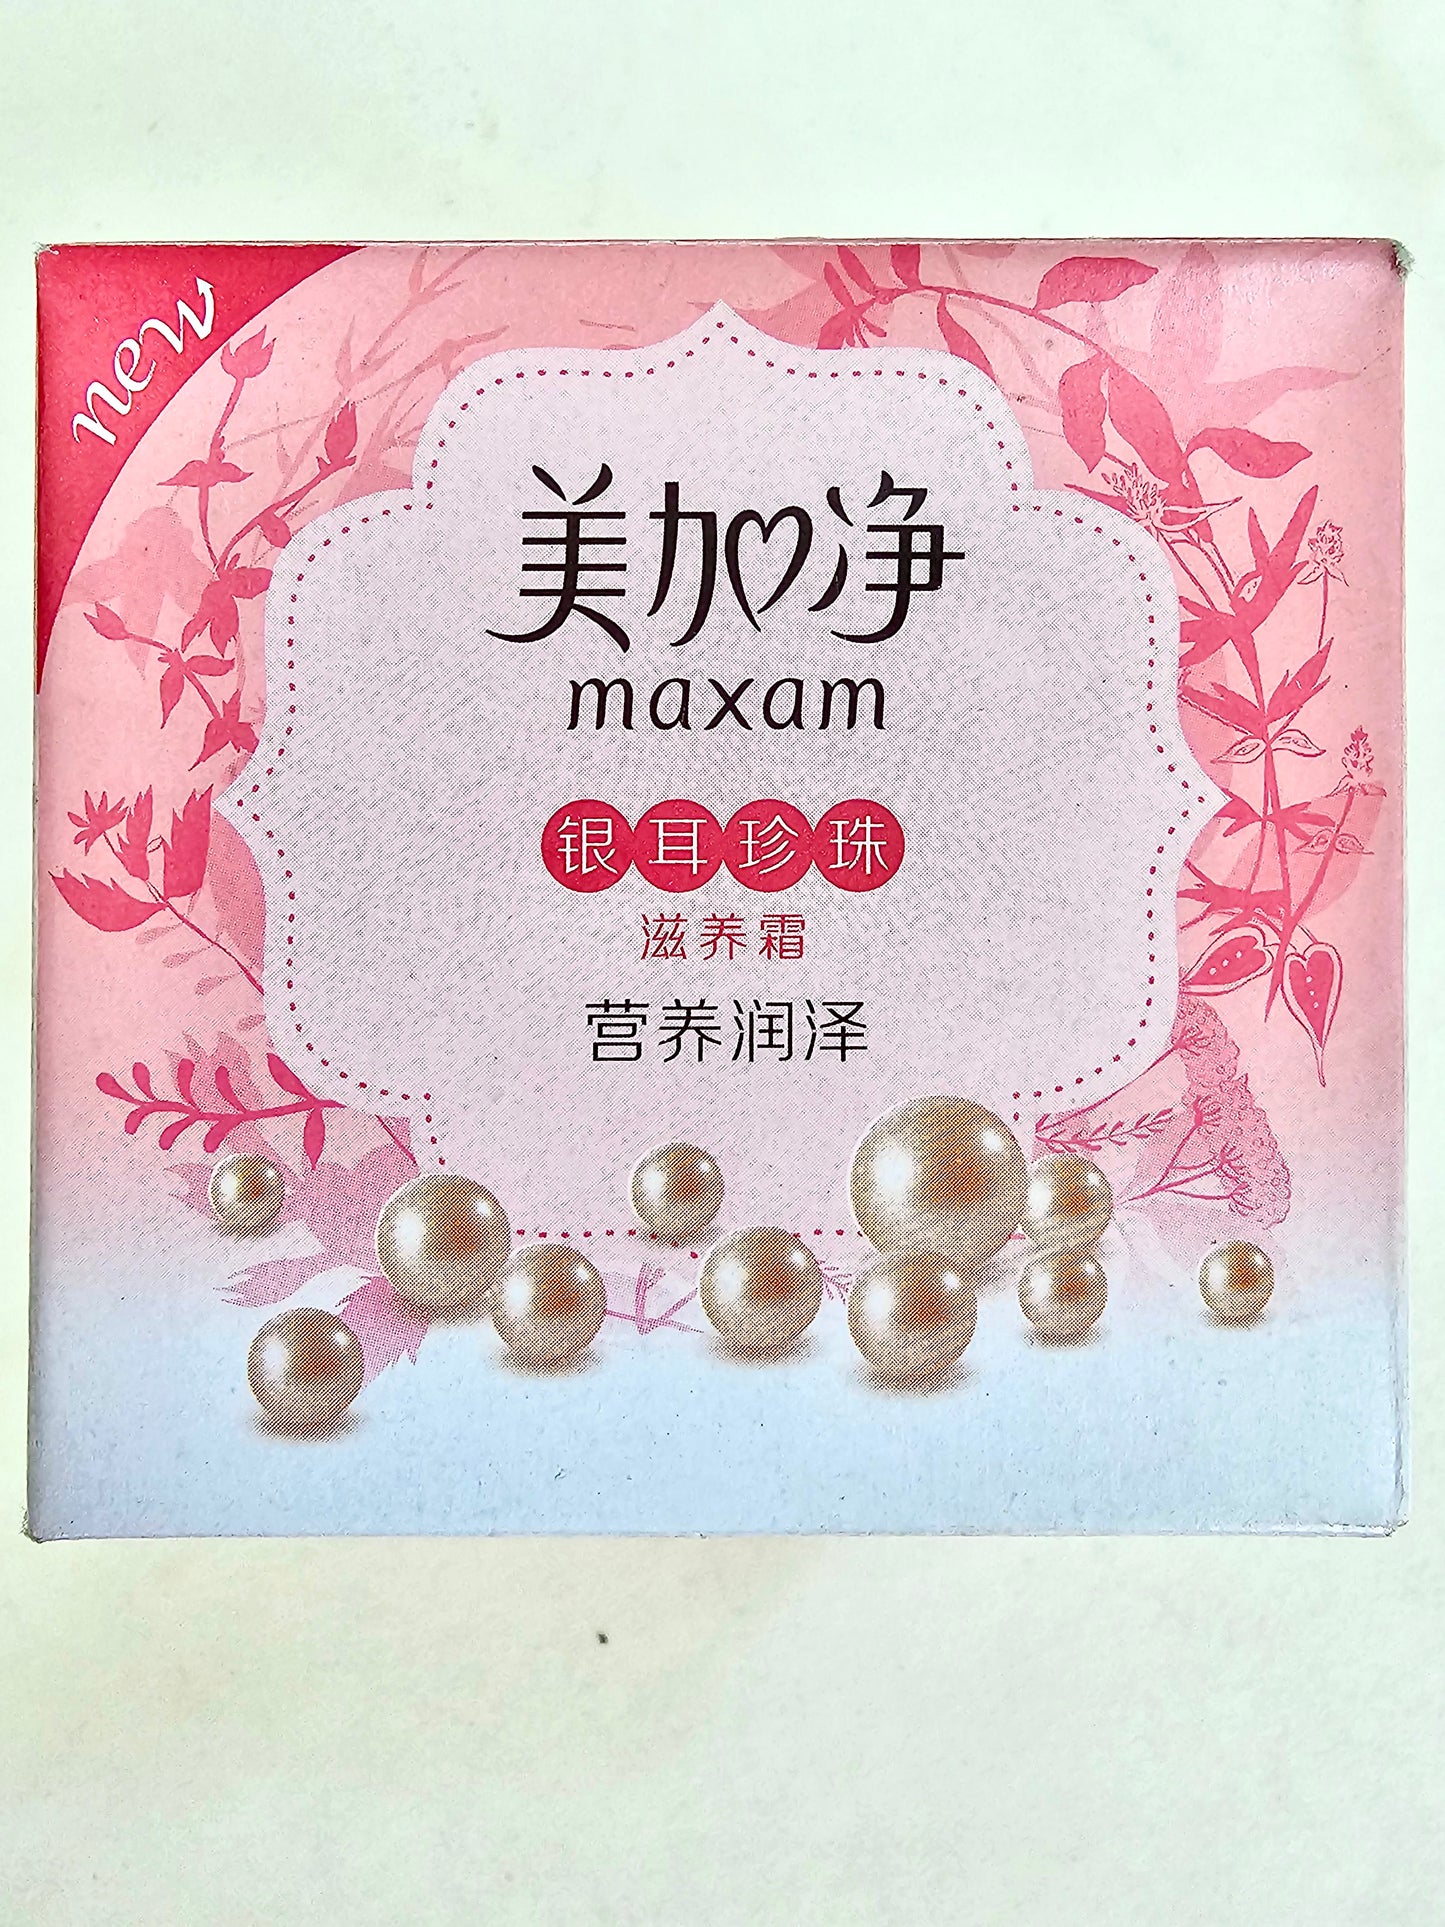 Maxam Pearl Cream